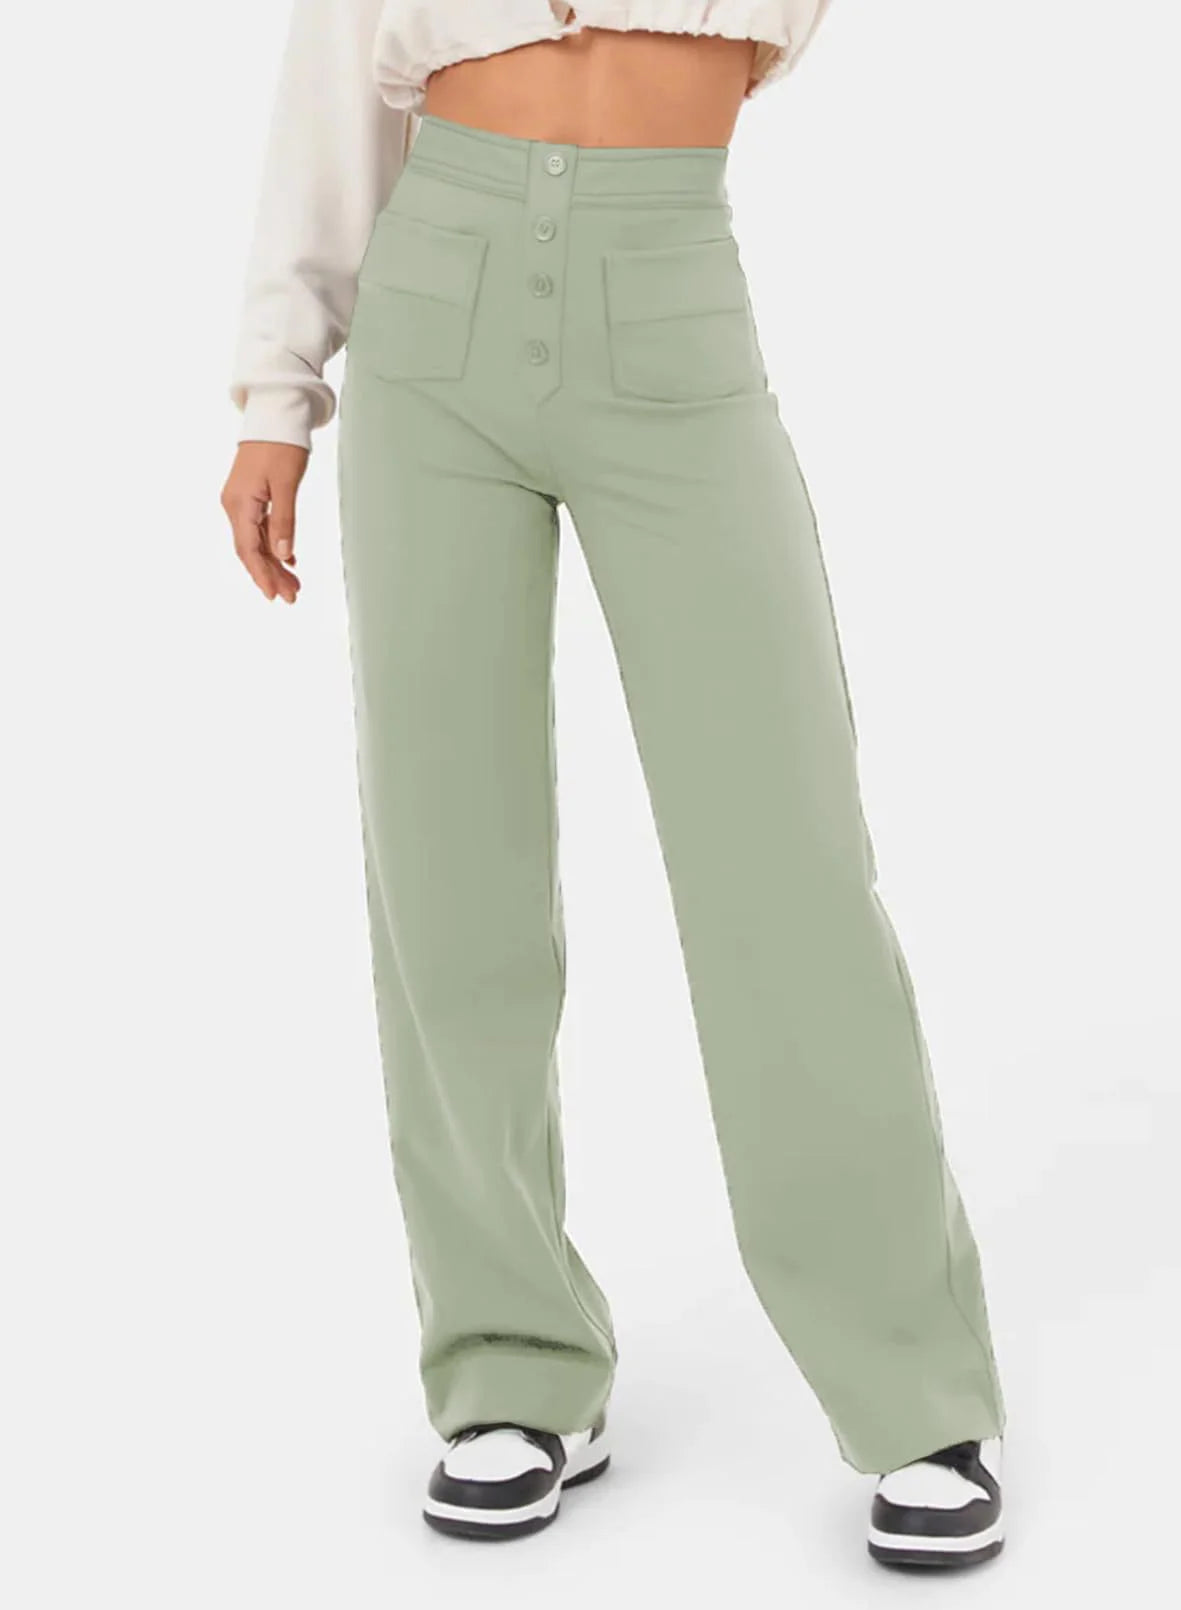 Multi Pocket High Elastic Pants